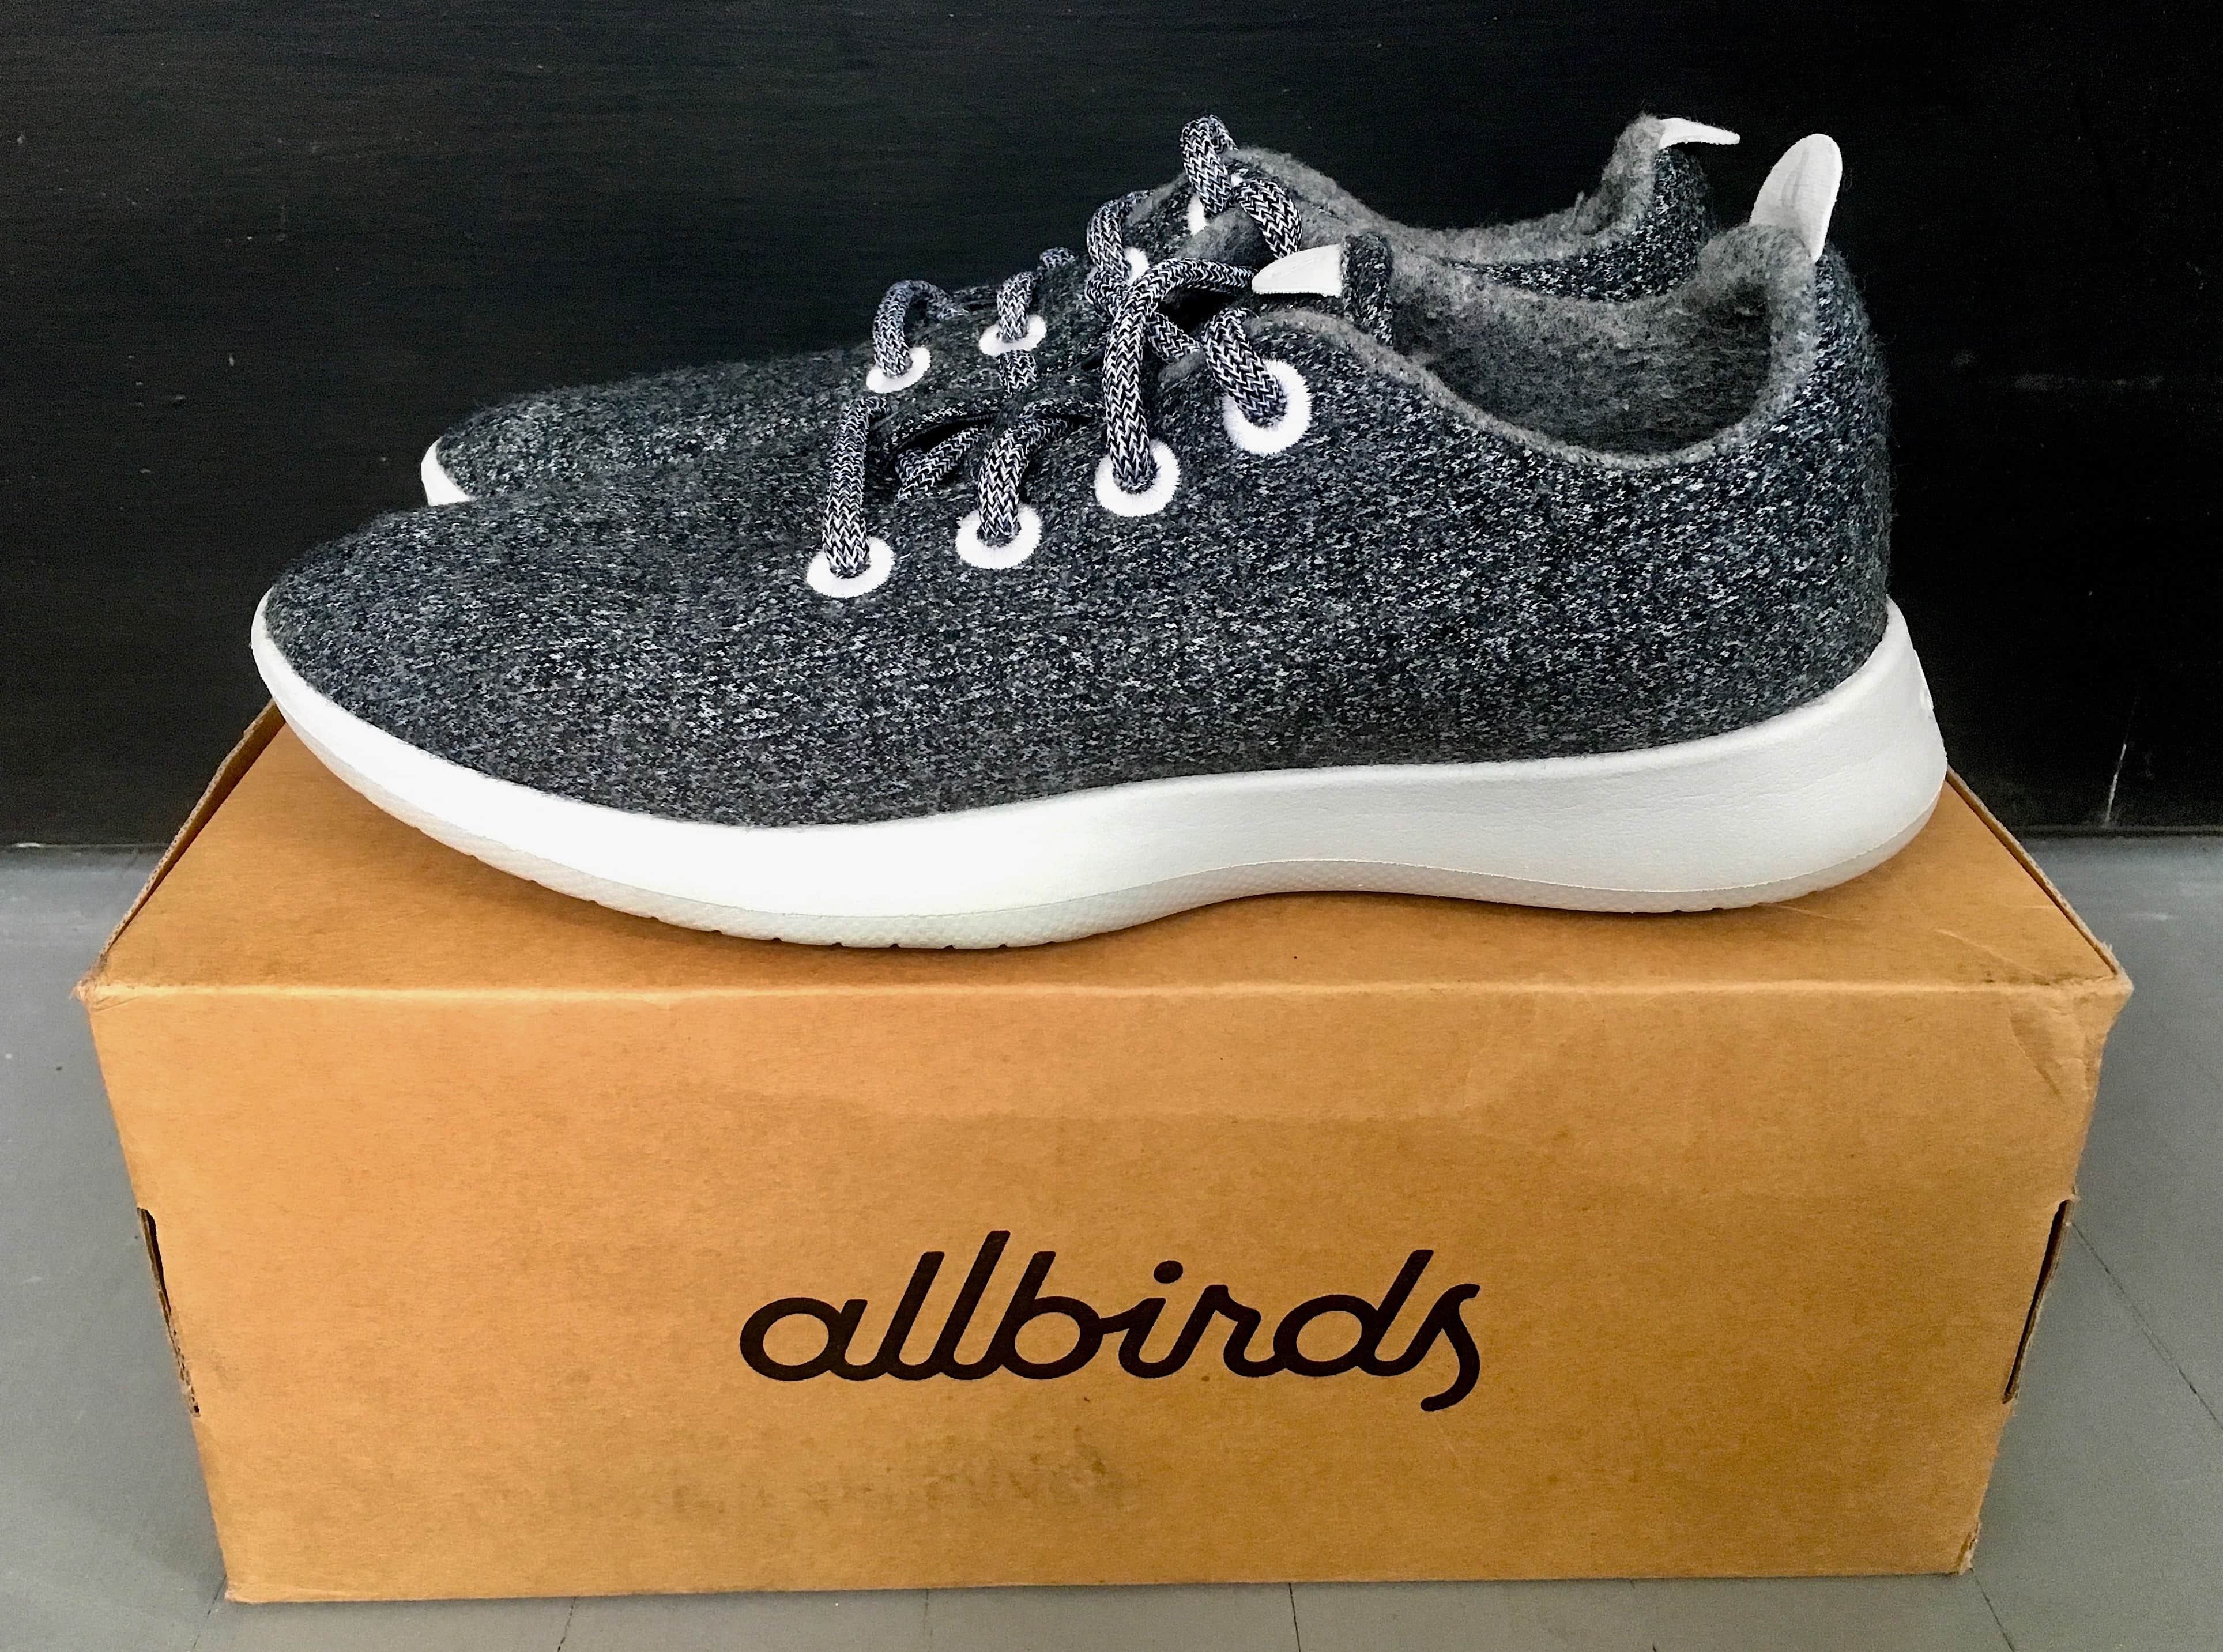 buy allbirds shoes